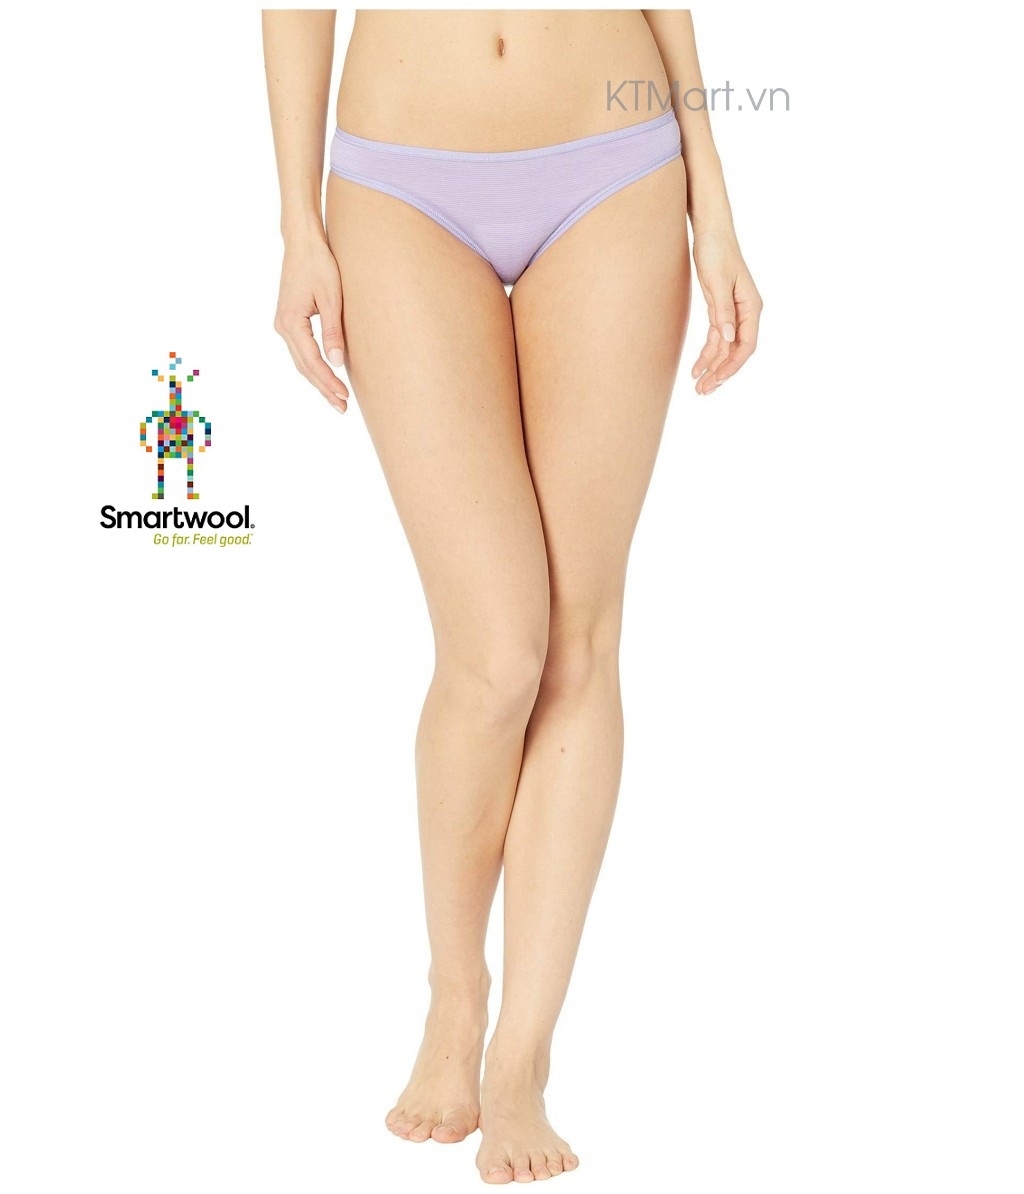 Smartwool Women’s Merino 150 Pattern Bikini SW016157 Smartwool size XS, S, M